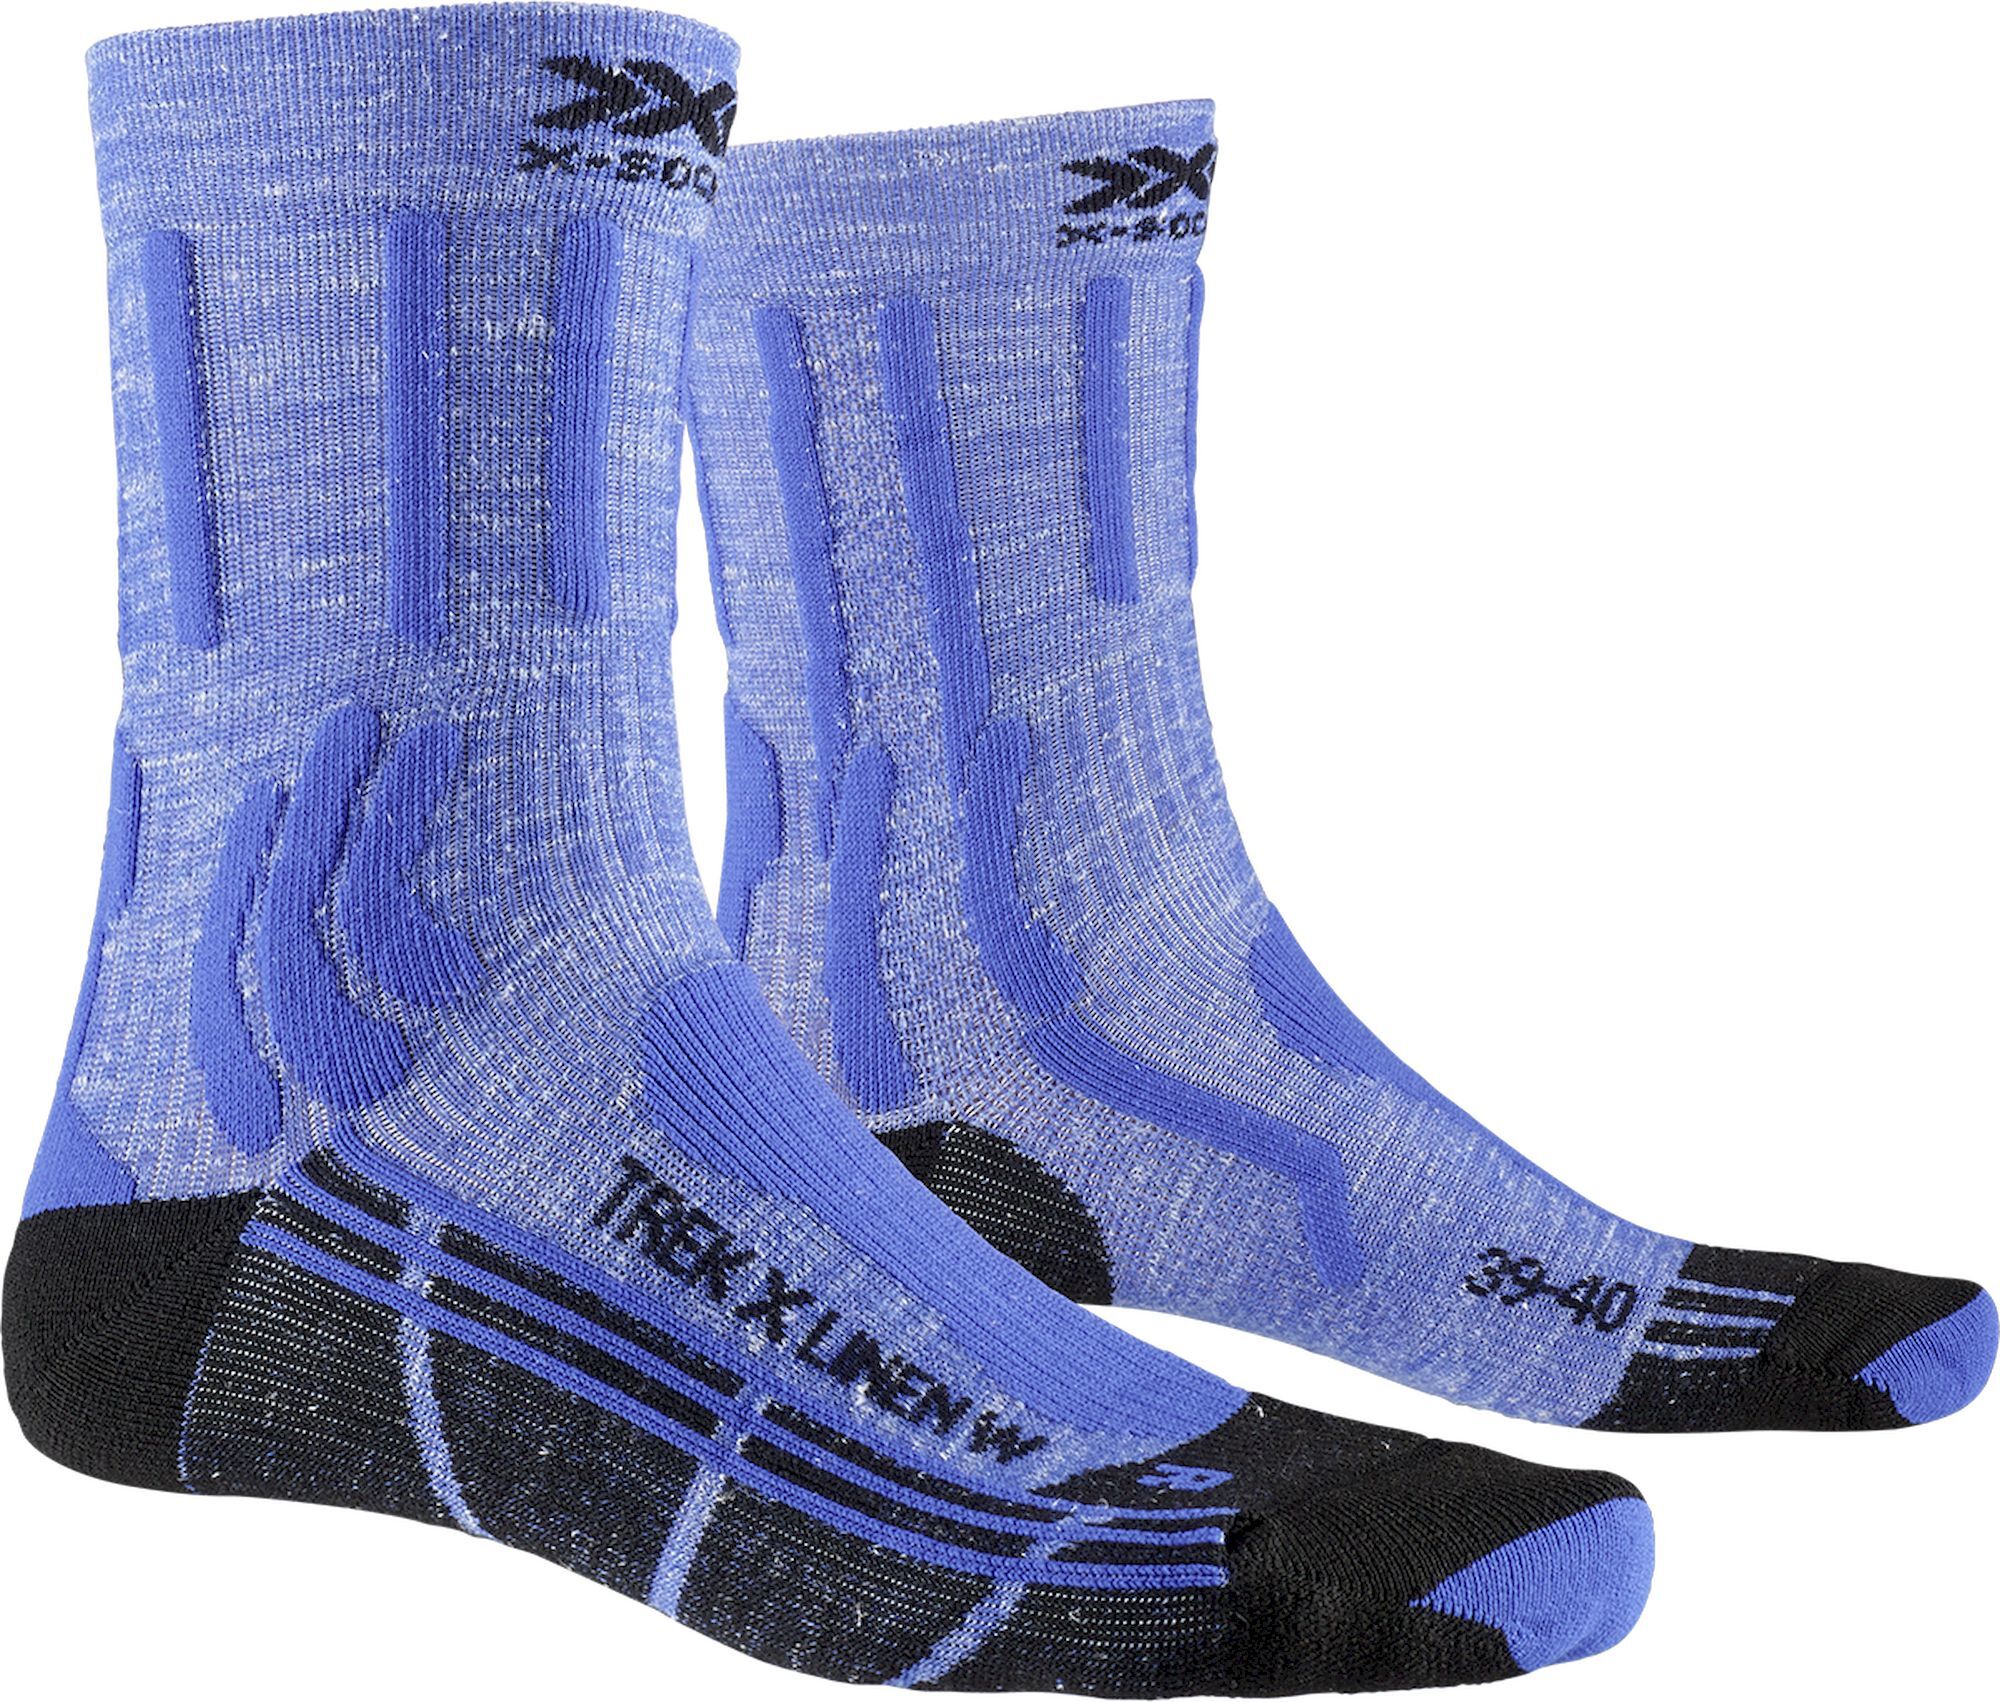 X-Socks Trek X Merino Light Lady - Walking socks - Women's